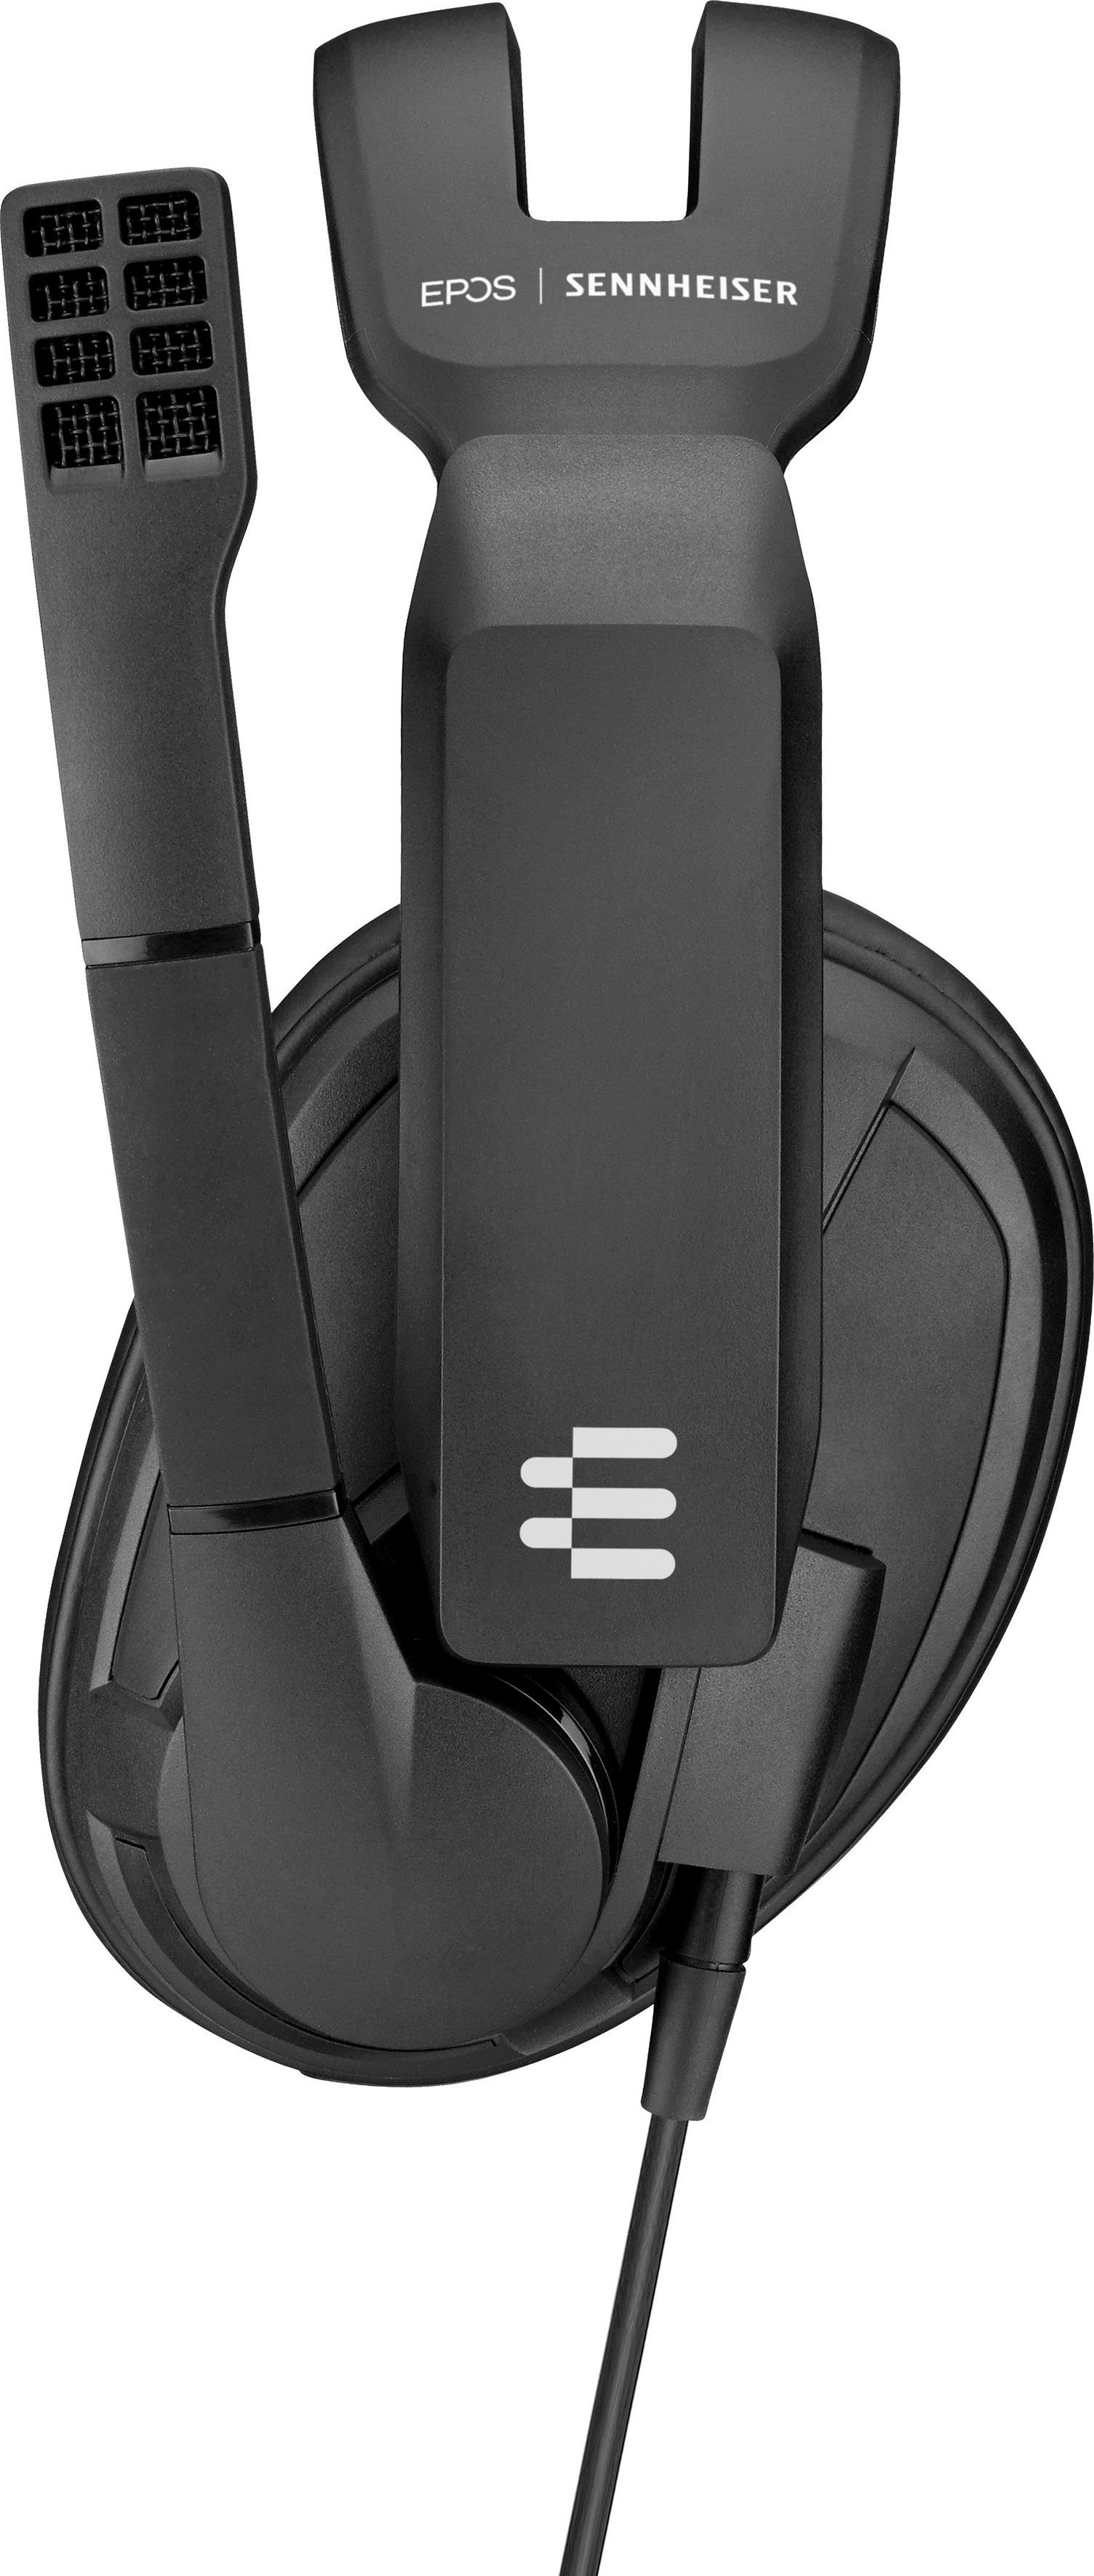 Gaming-Headset Sennheiser EPOS, 302 GSP